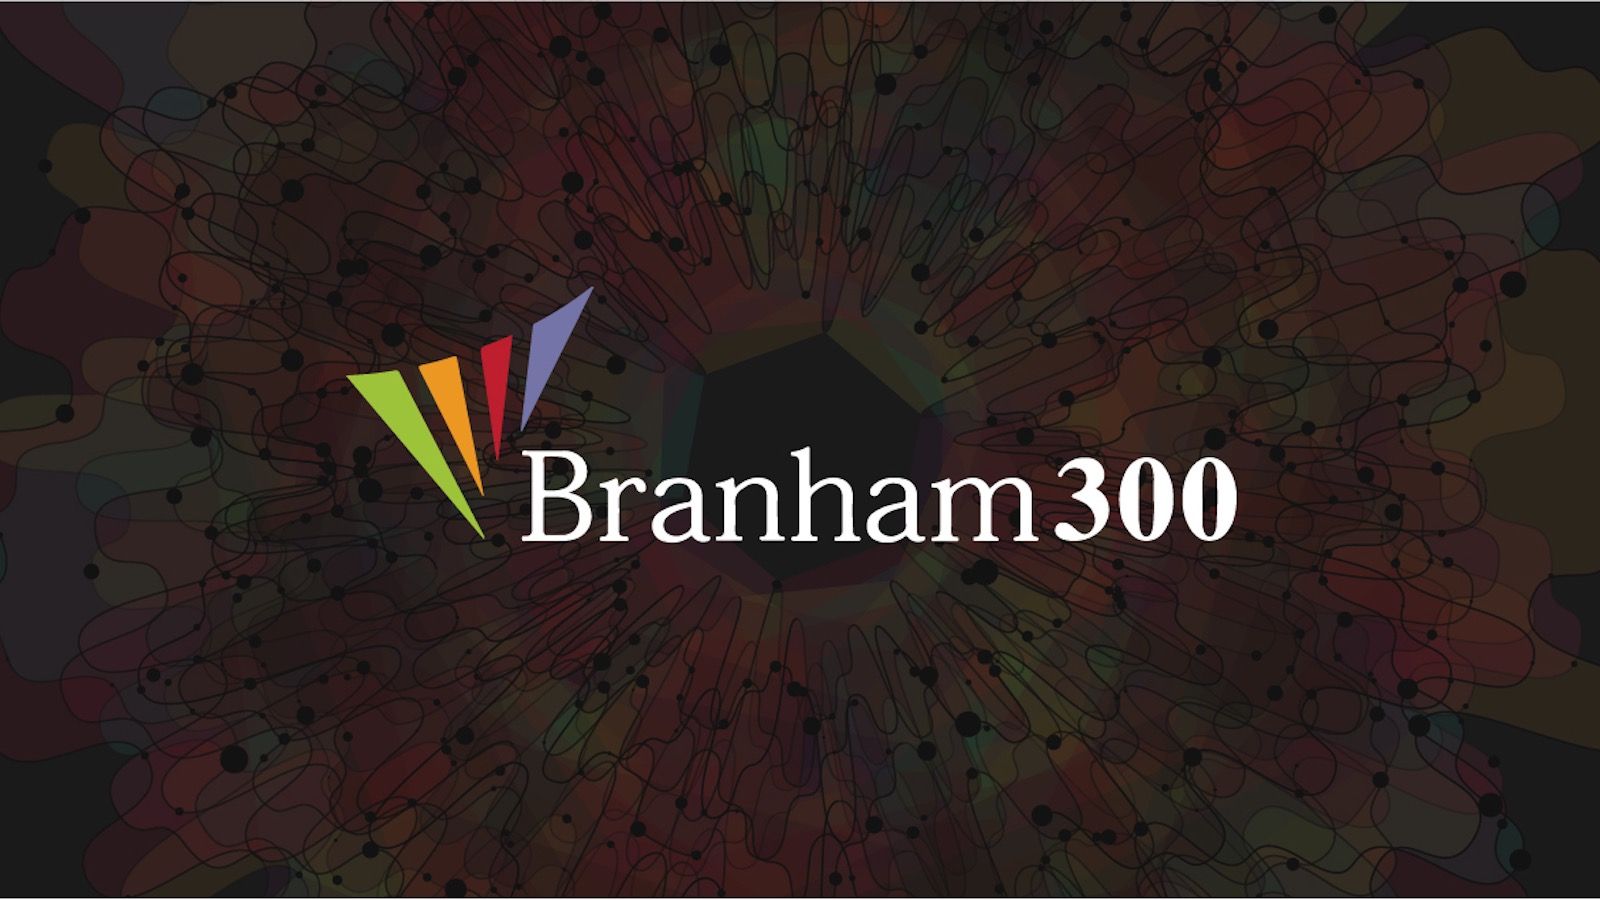 mobileLIVE Branham 300 award